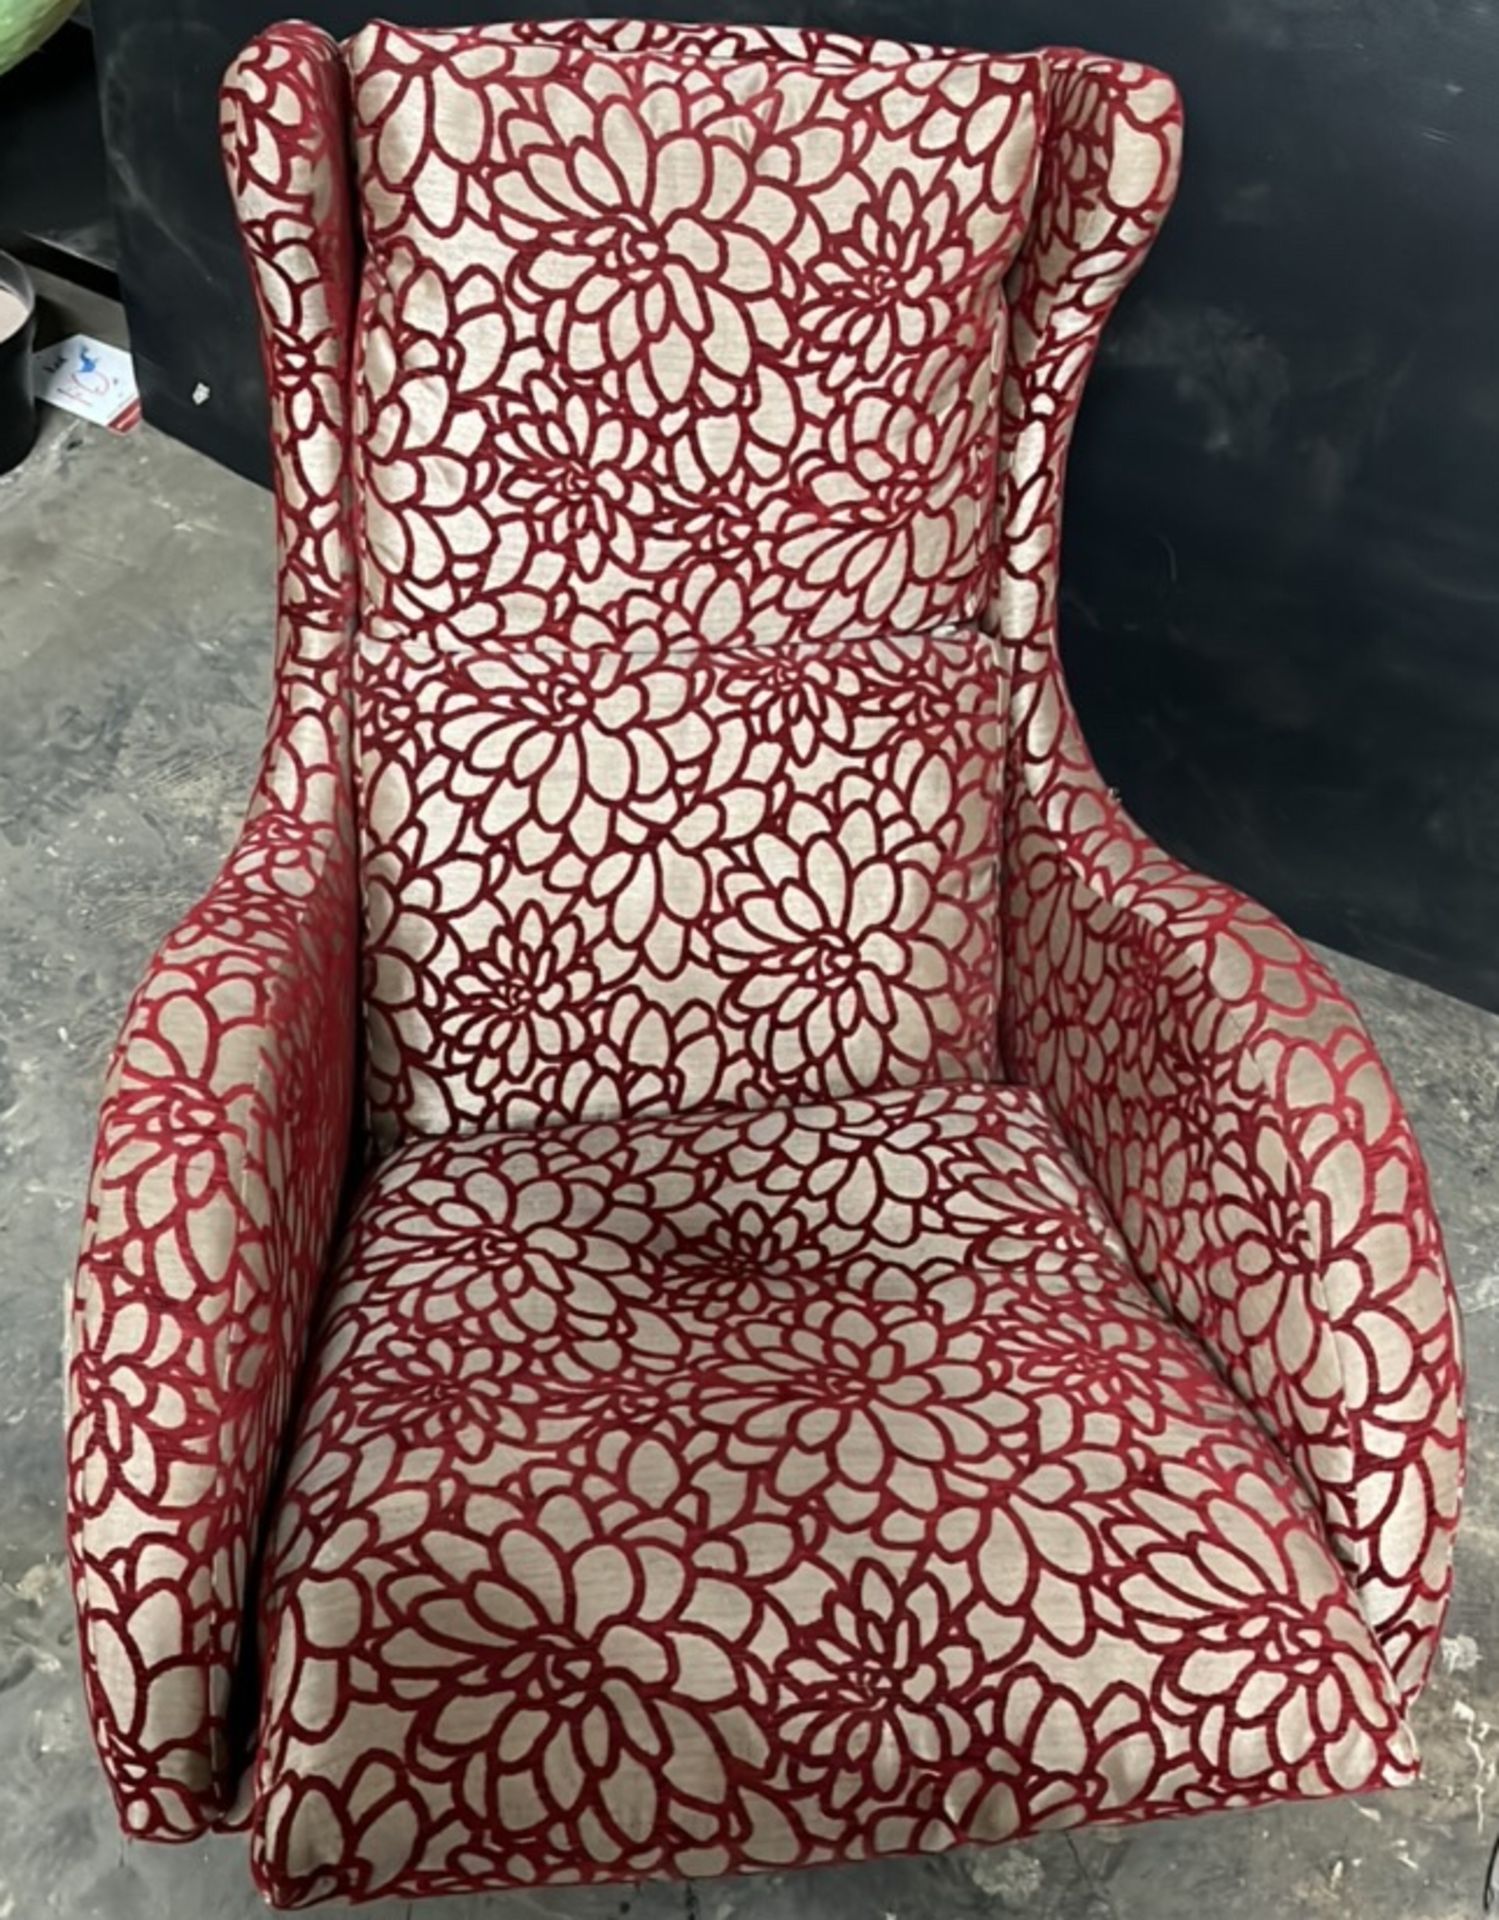 Red Velvet Flower Patterned Rocking Chair - Image 2 of 3